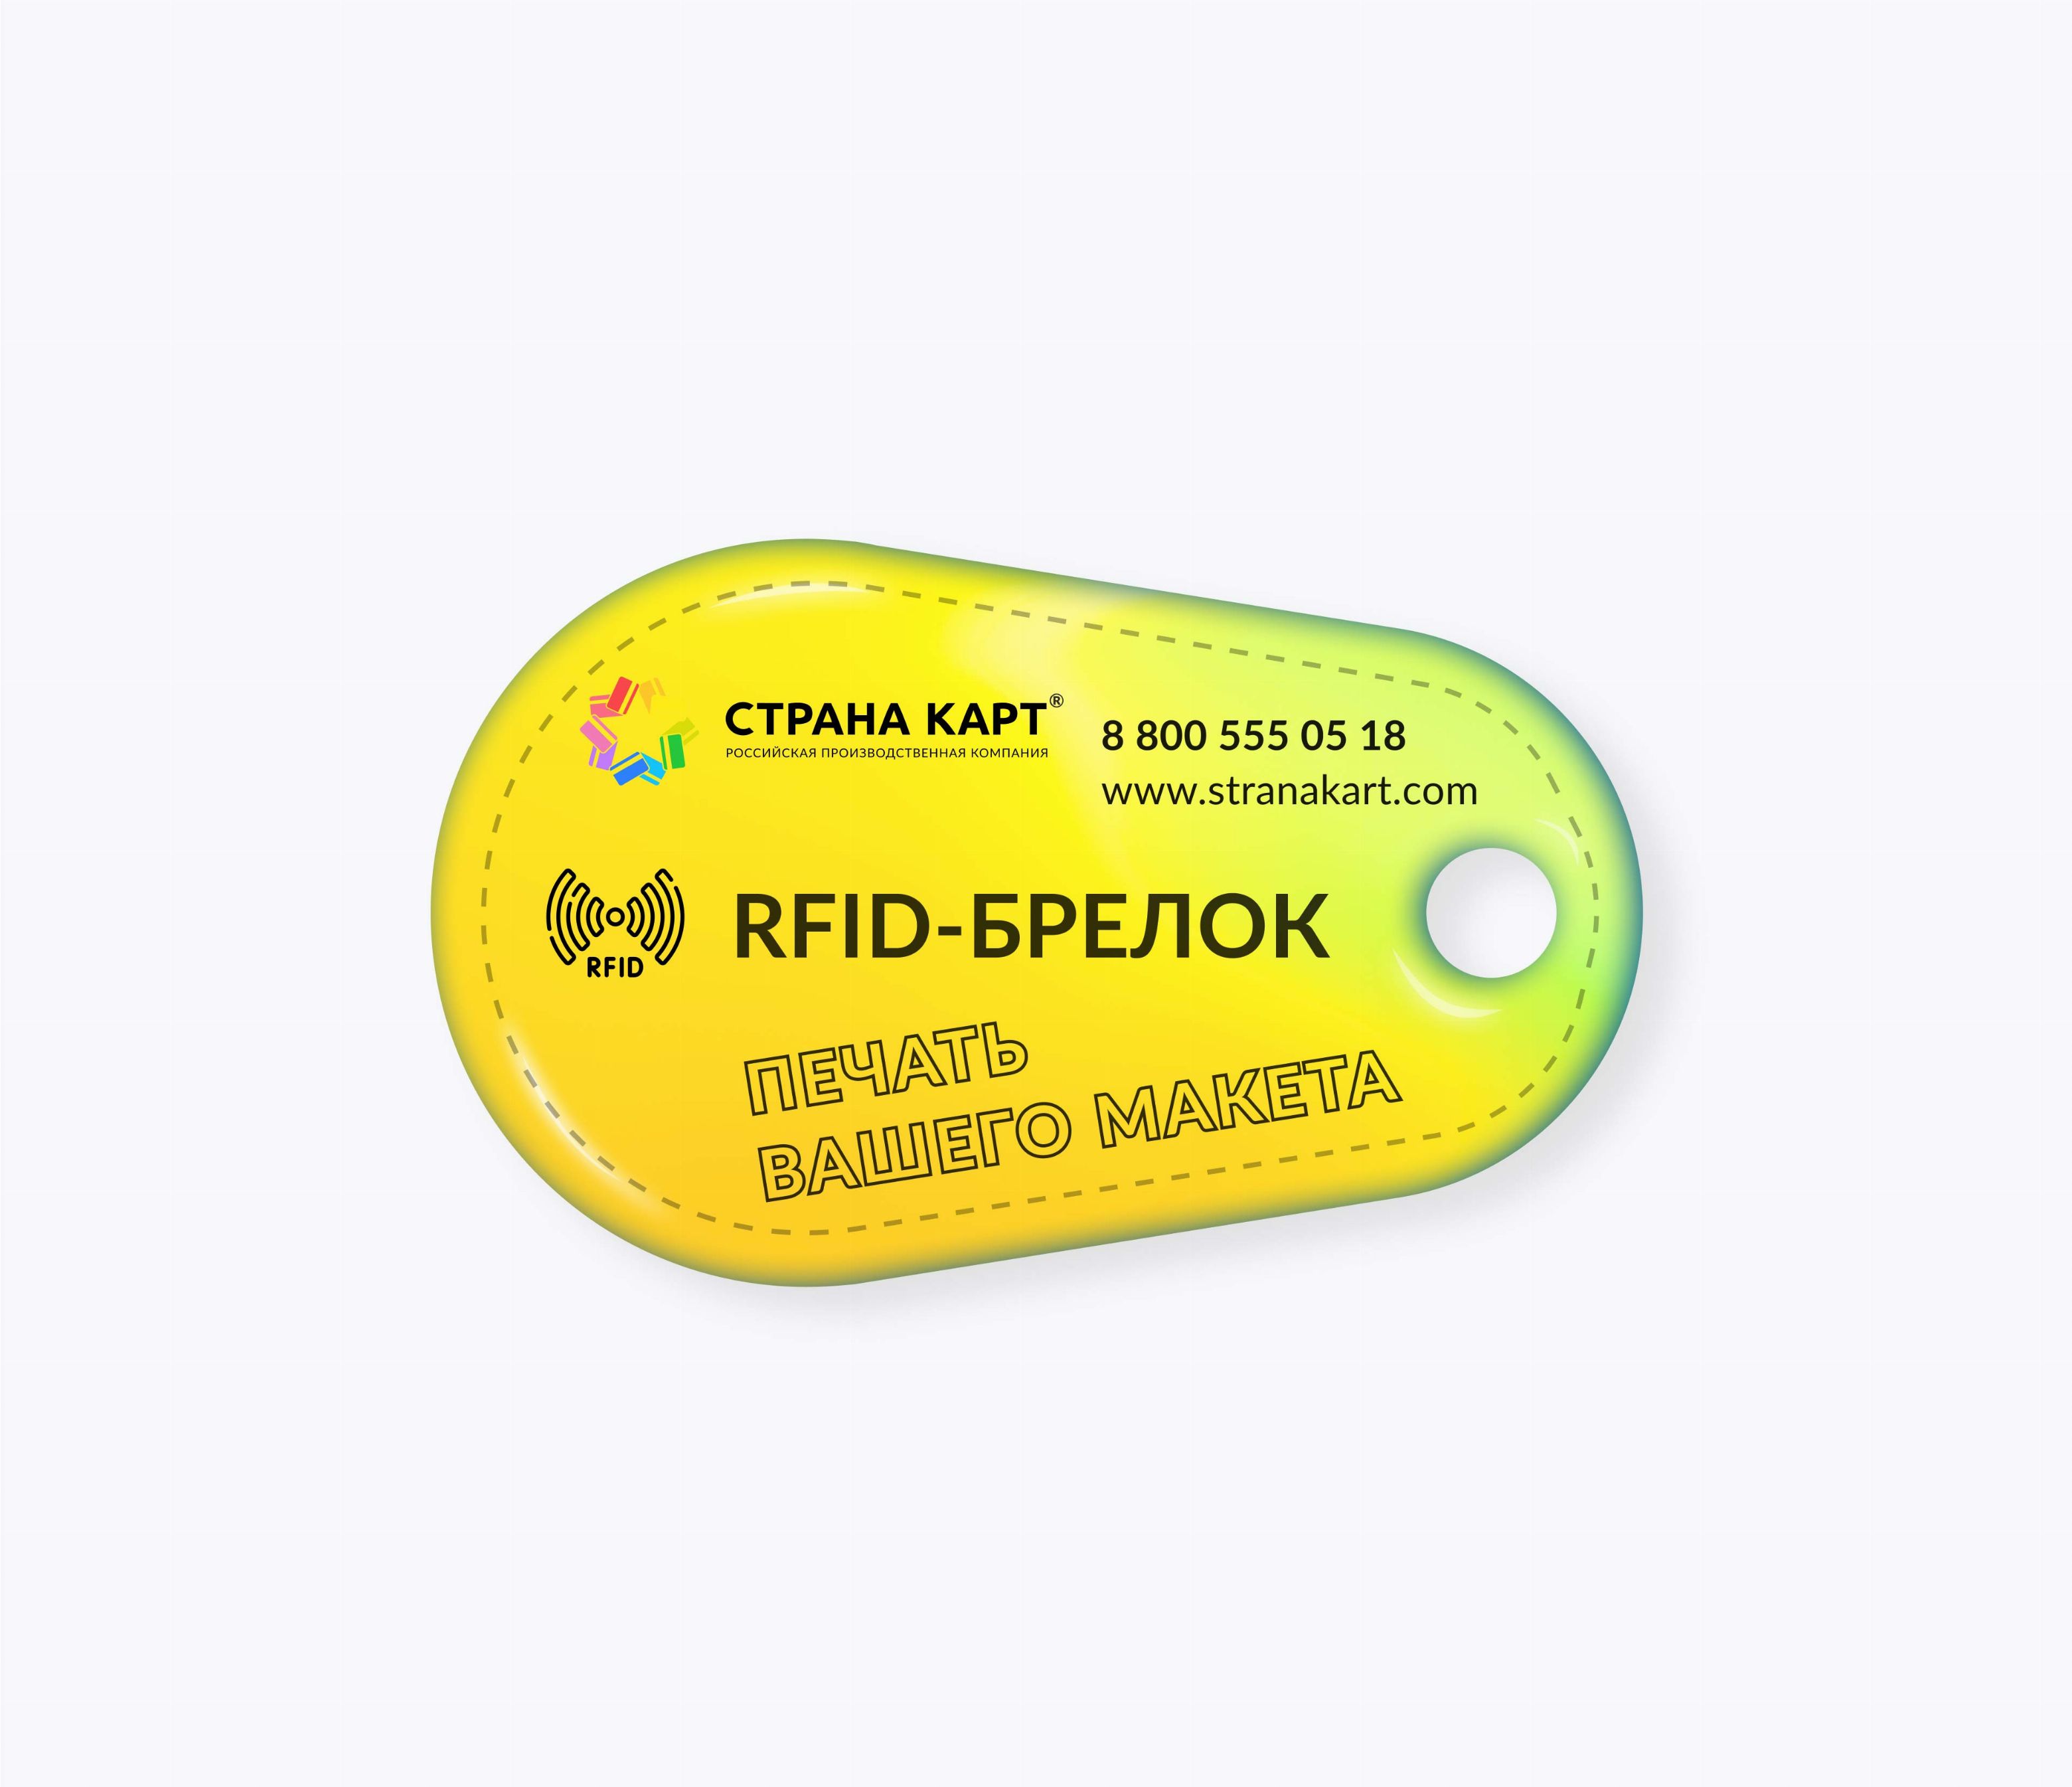 Каплевидные RFID-брелоки NEOKEY® с чипом MIK1KMCM 4 byte nUID RFID-брелоки NEOKEY® с чипом MIK1KMCM 4 byte nUID